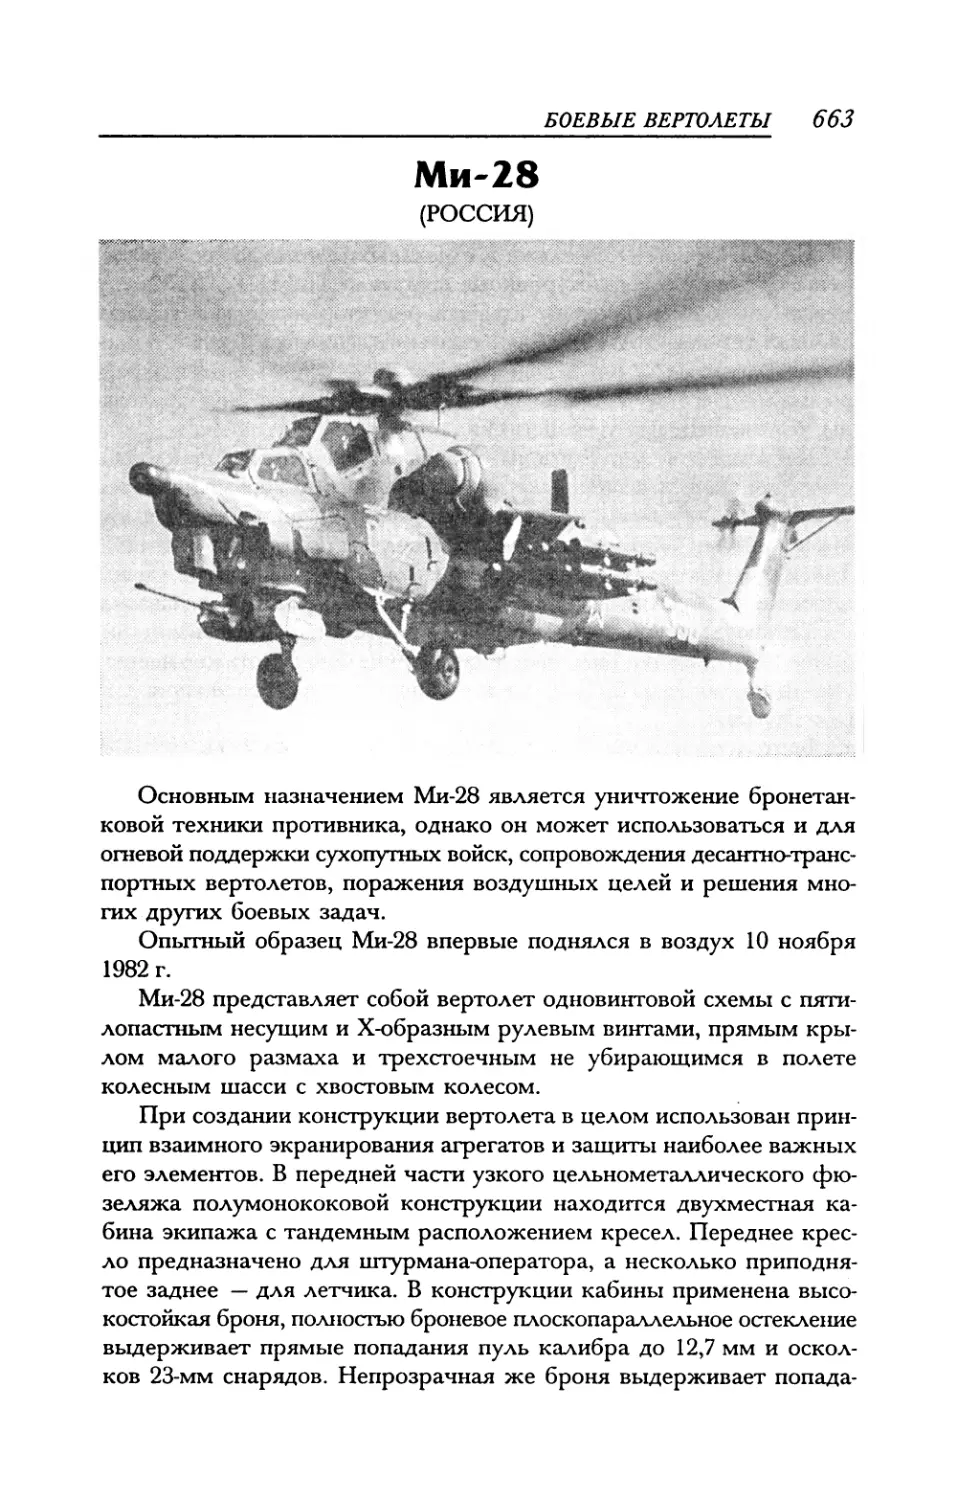 Ми-28